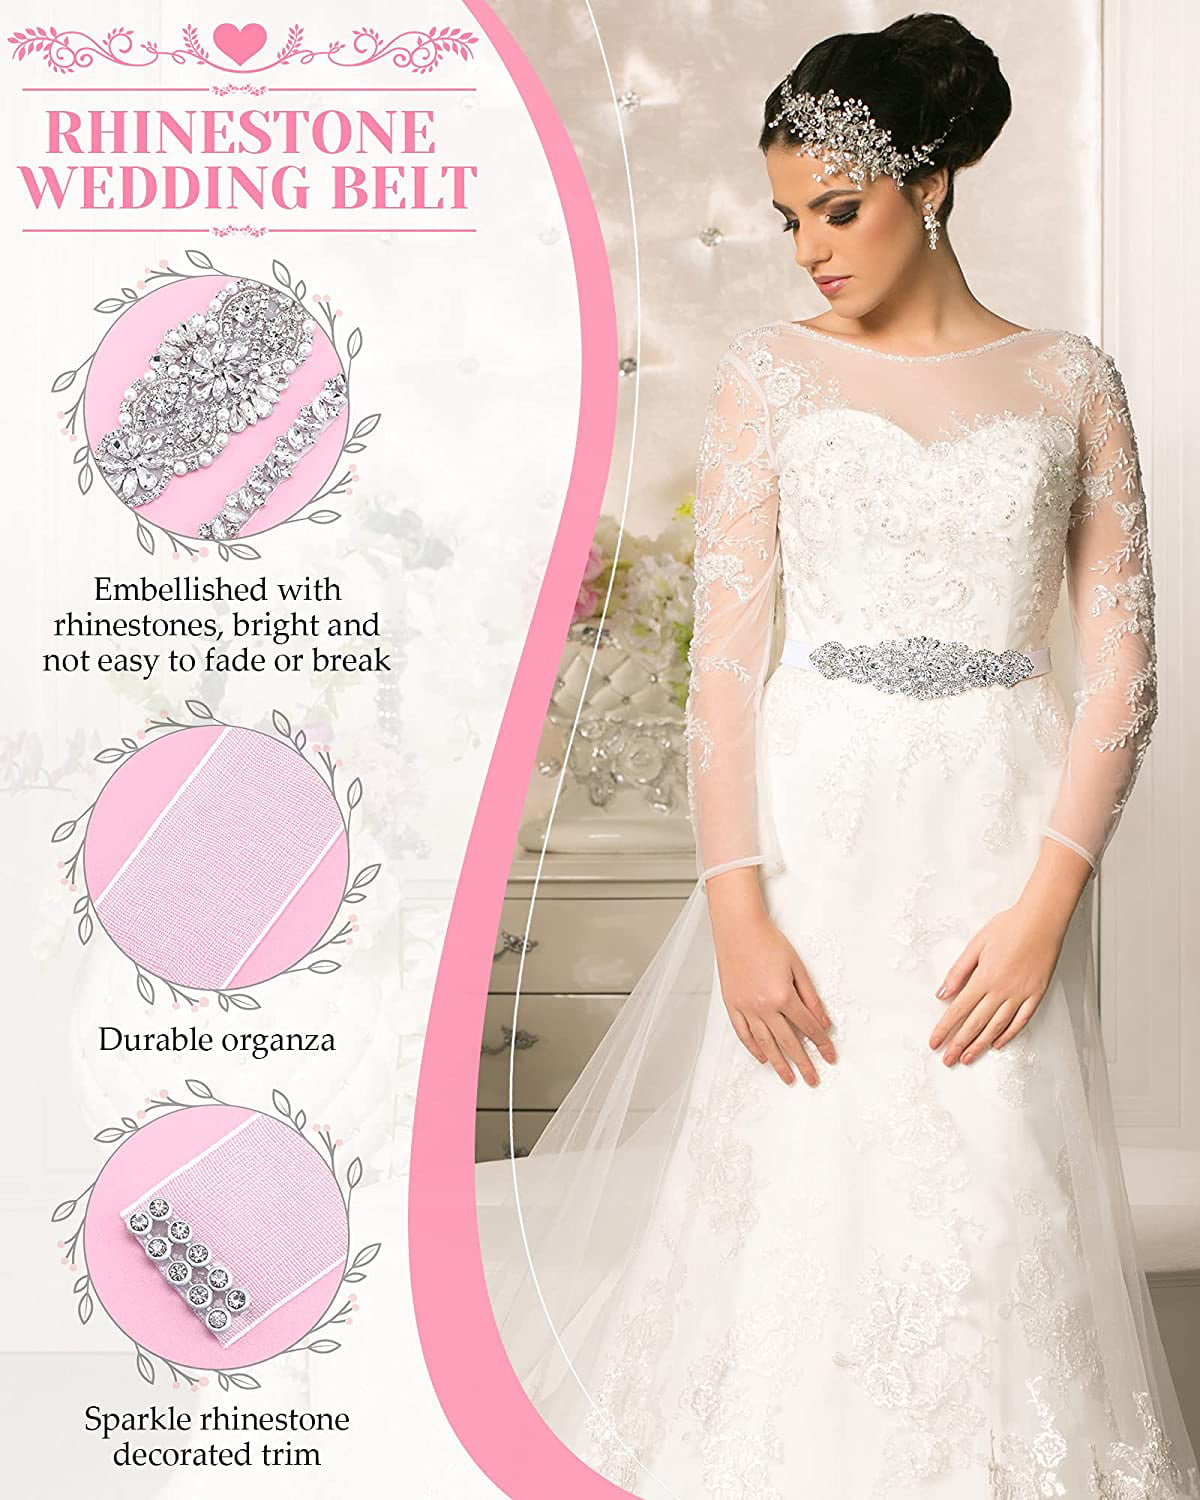 Crystal Bridal Sash,Rhinestone Bridesmaids Wedding Dress Sash Belt with Ribbon 